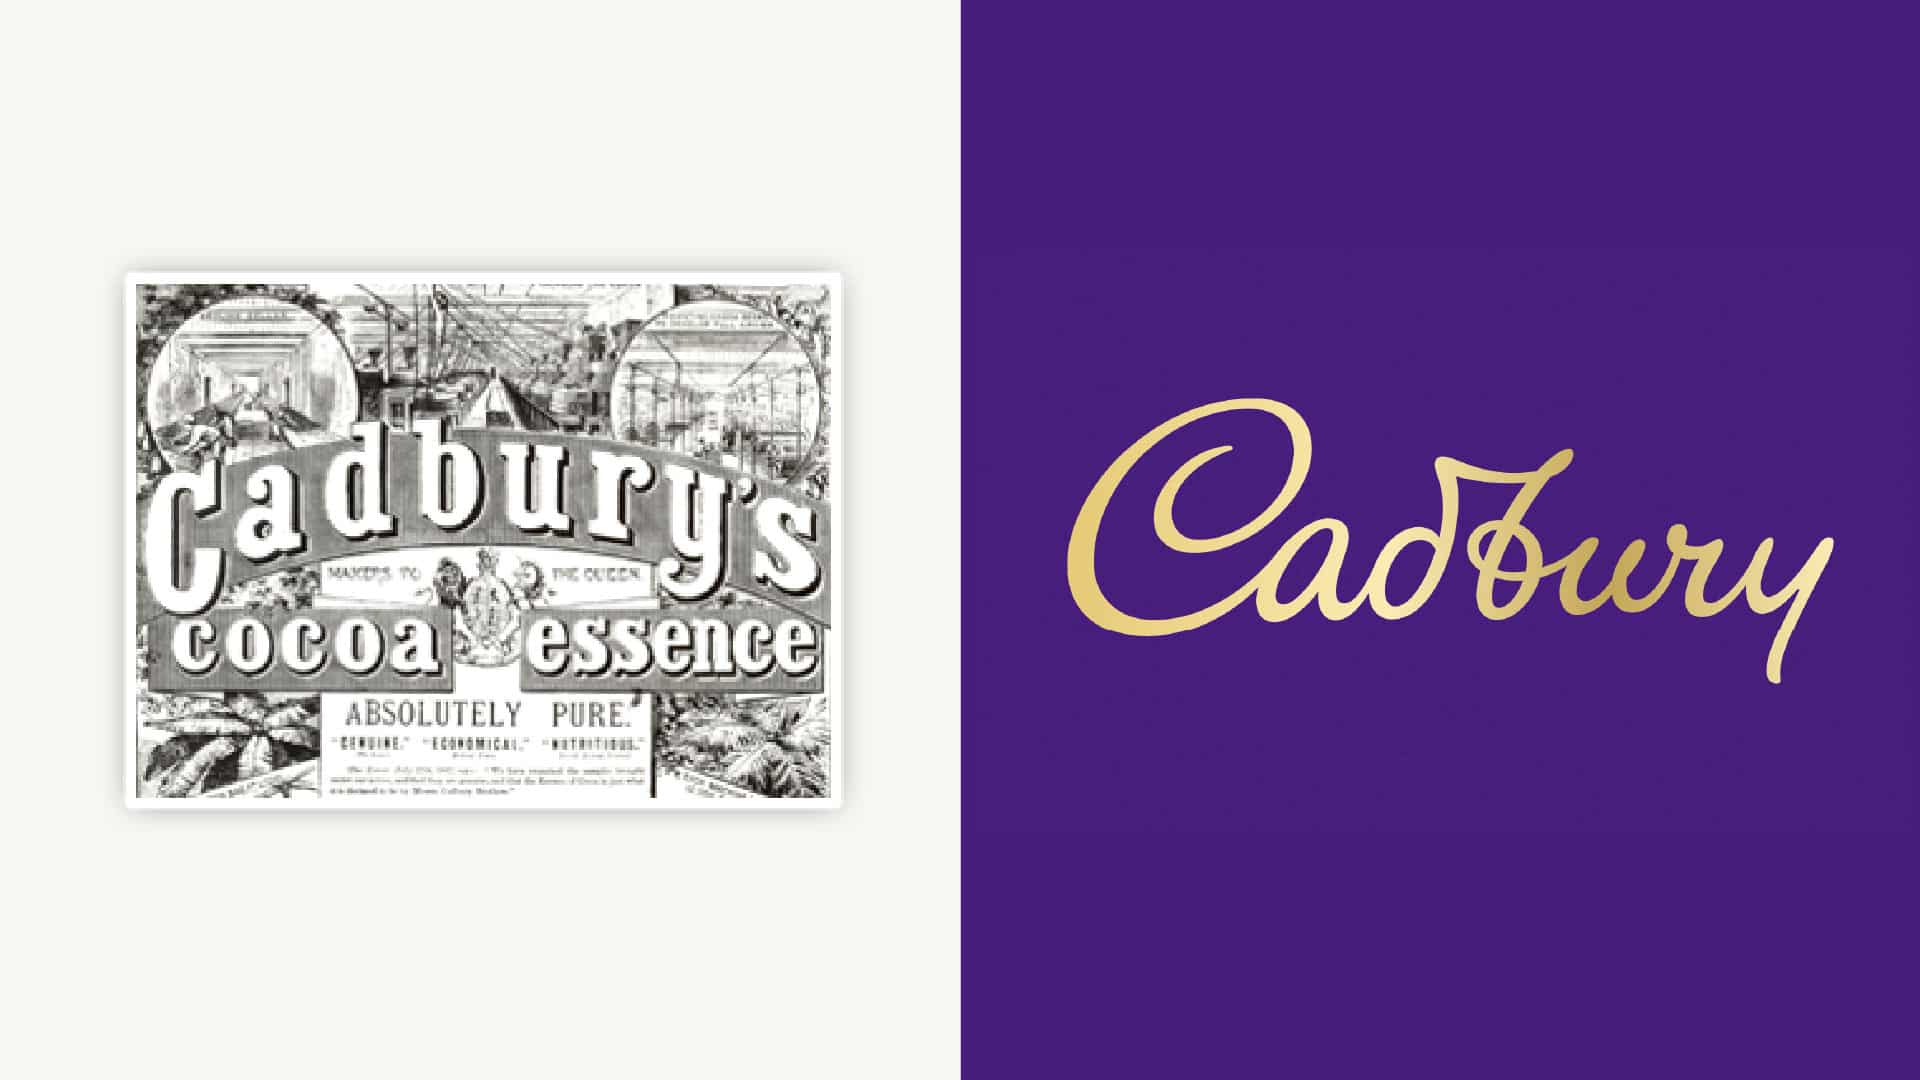 The history of Cadbury Branding